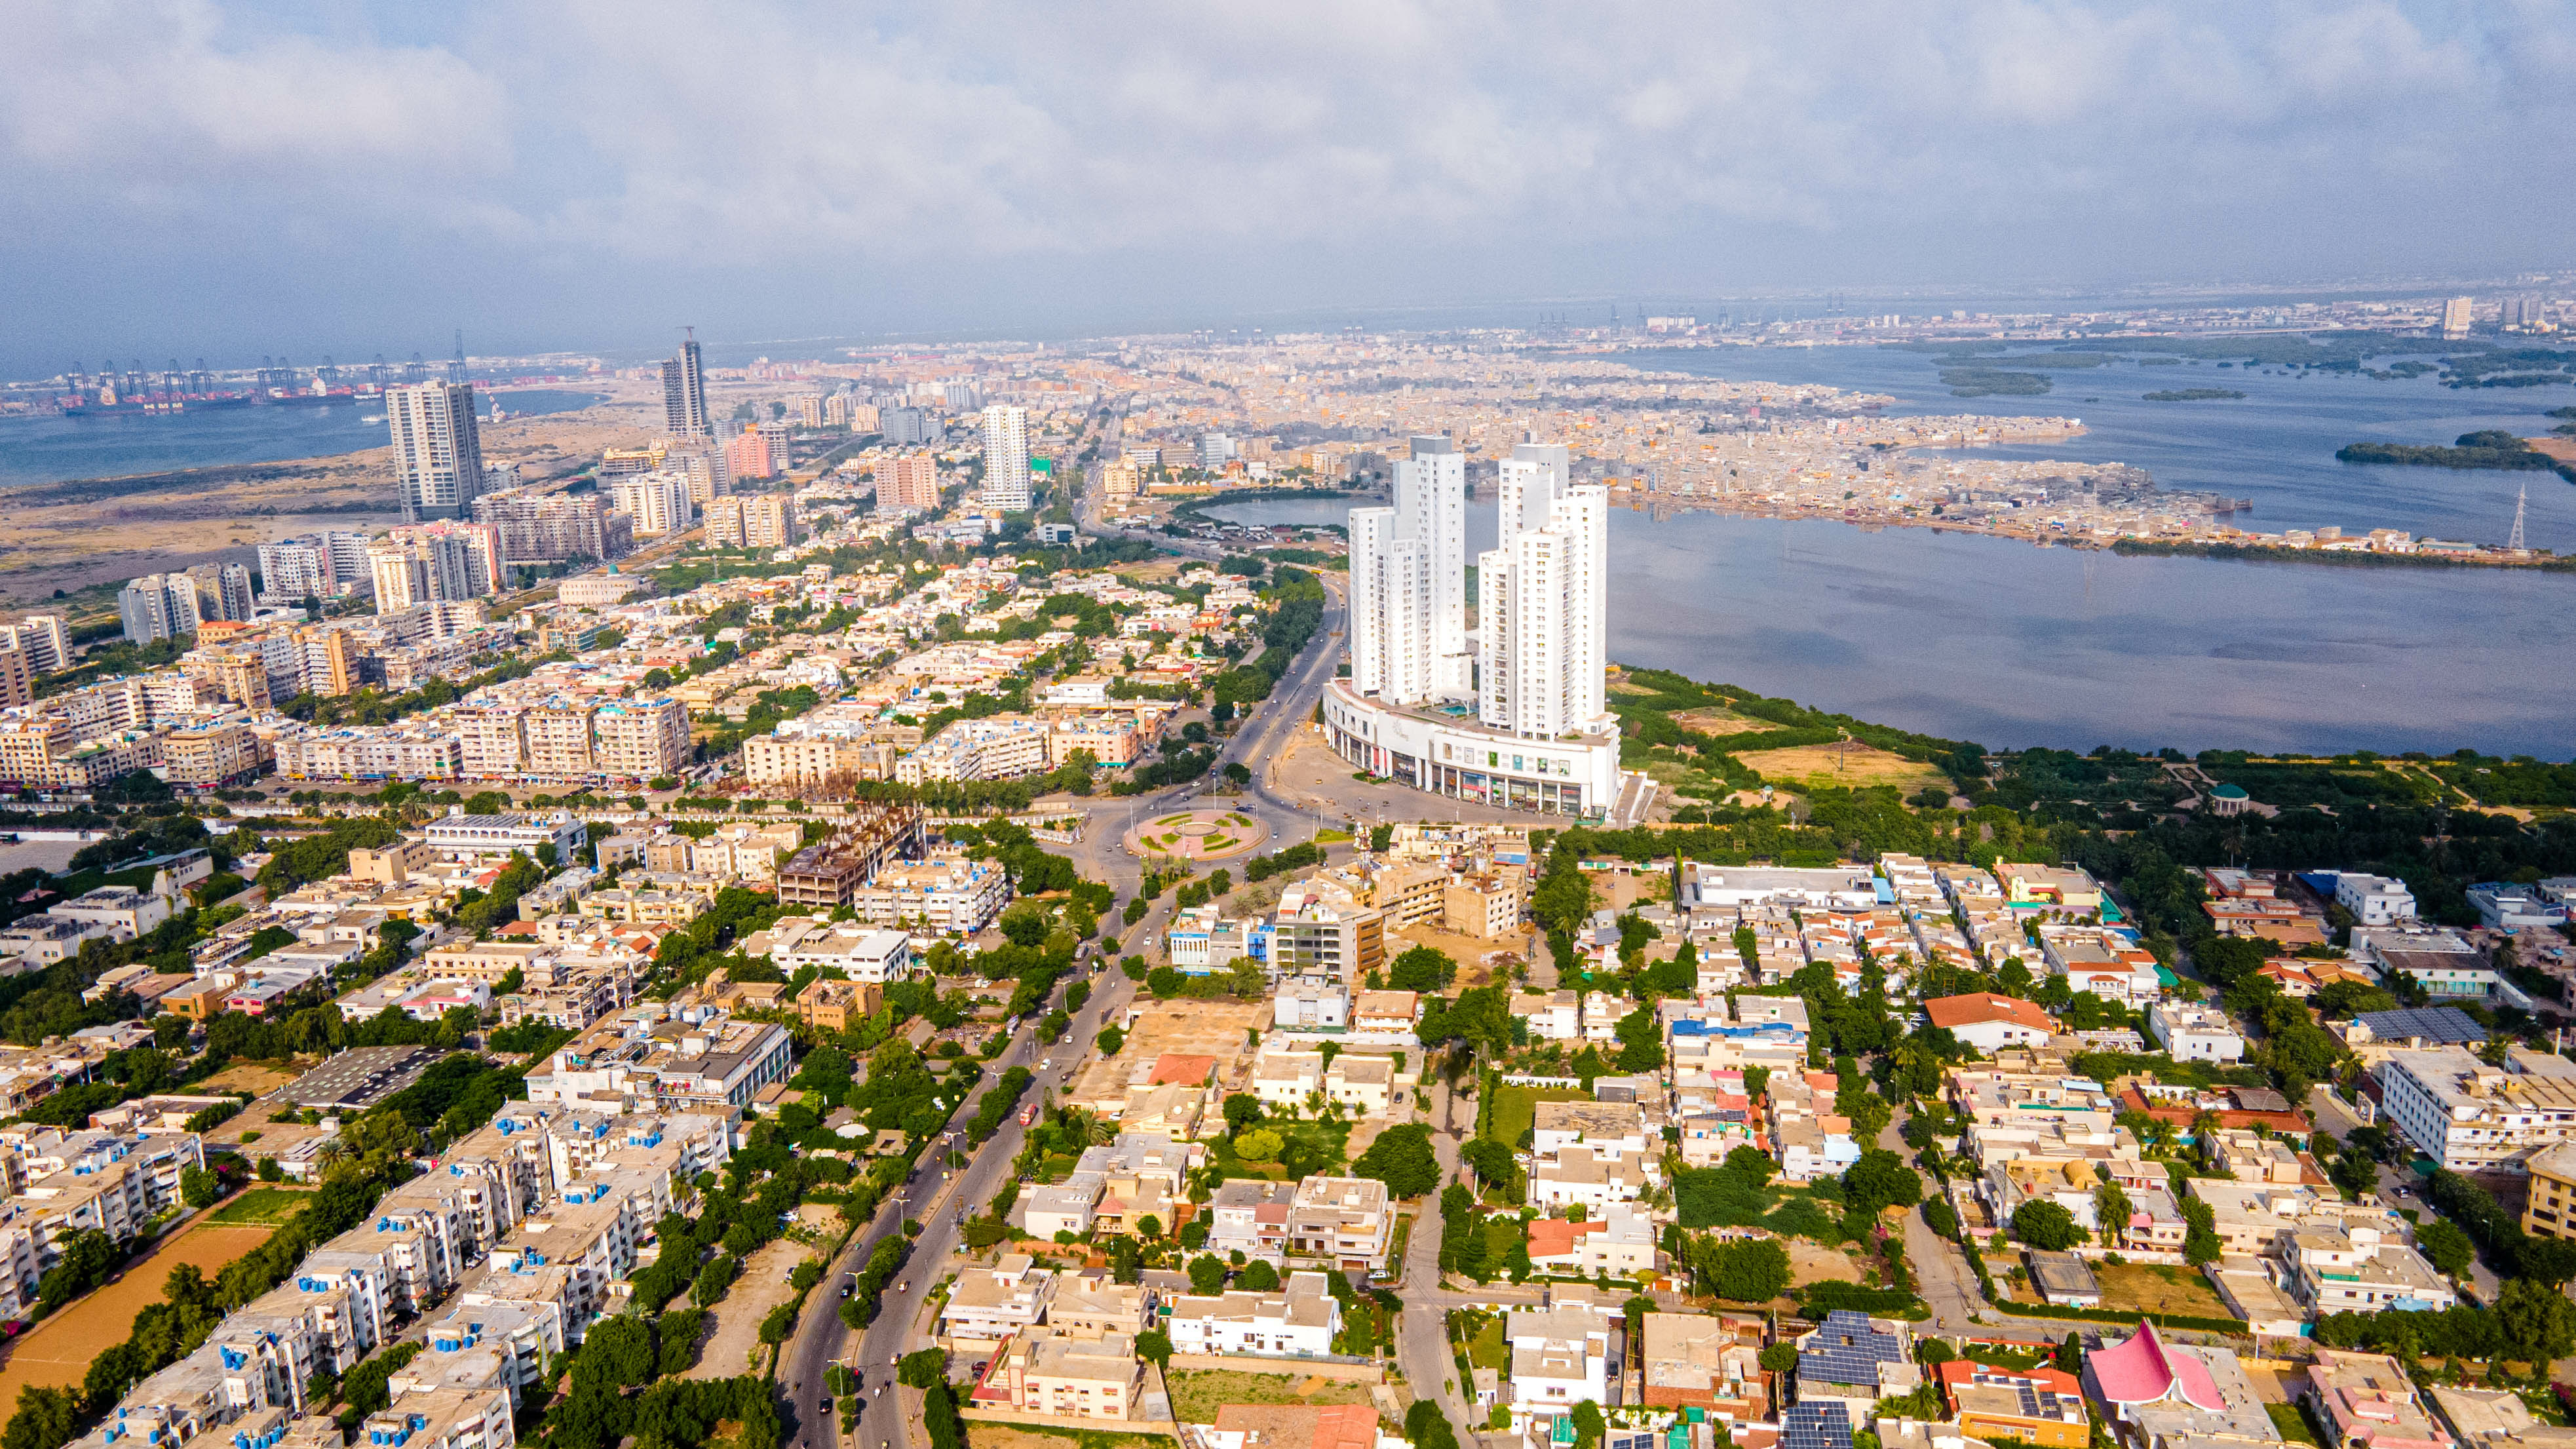 Aerial view of The City of lights, Karachi, Pakistan